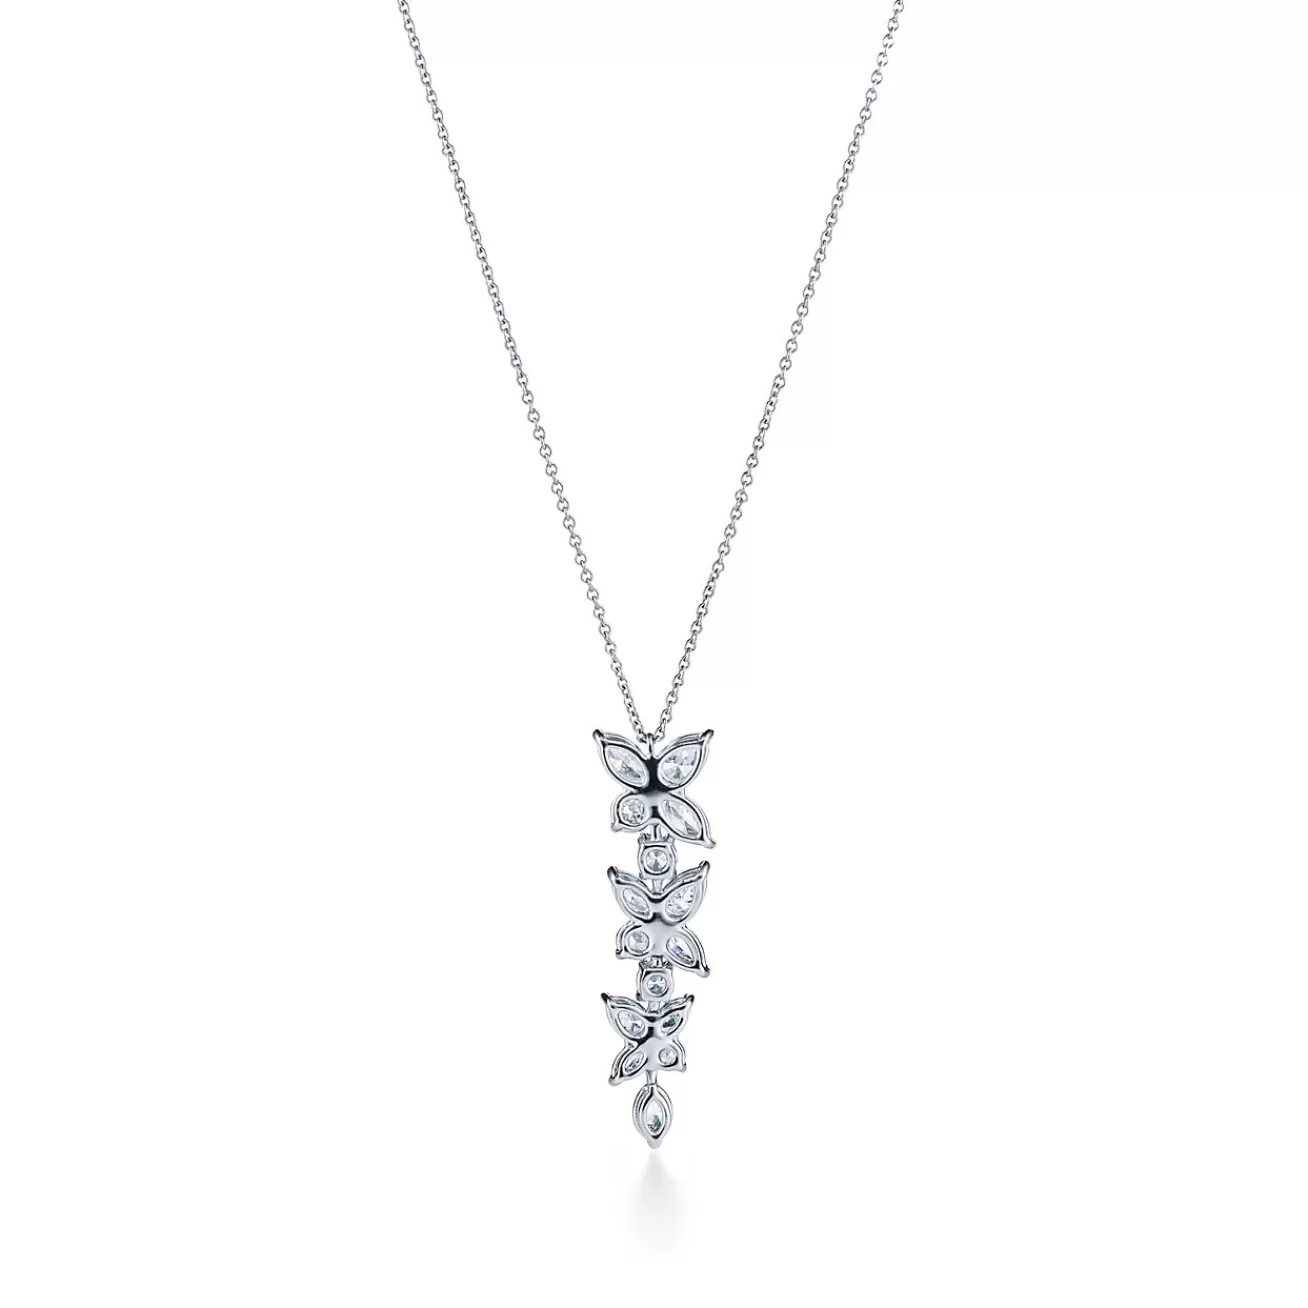 Tiffany & Co. Tiffany Victoria® mixed cluster drop pendant in platinum with diamonds. | ^ Necklaces & Pendants | Platinum Jewelry